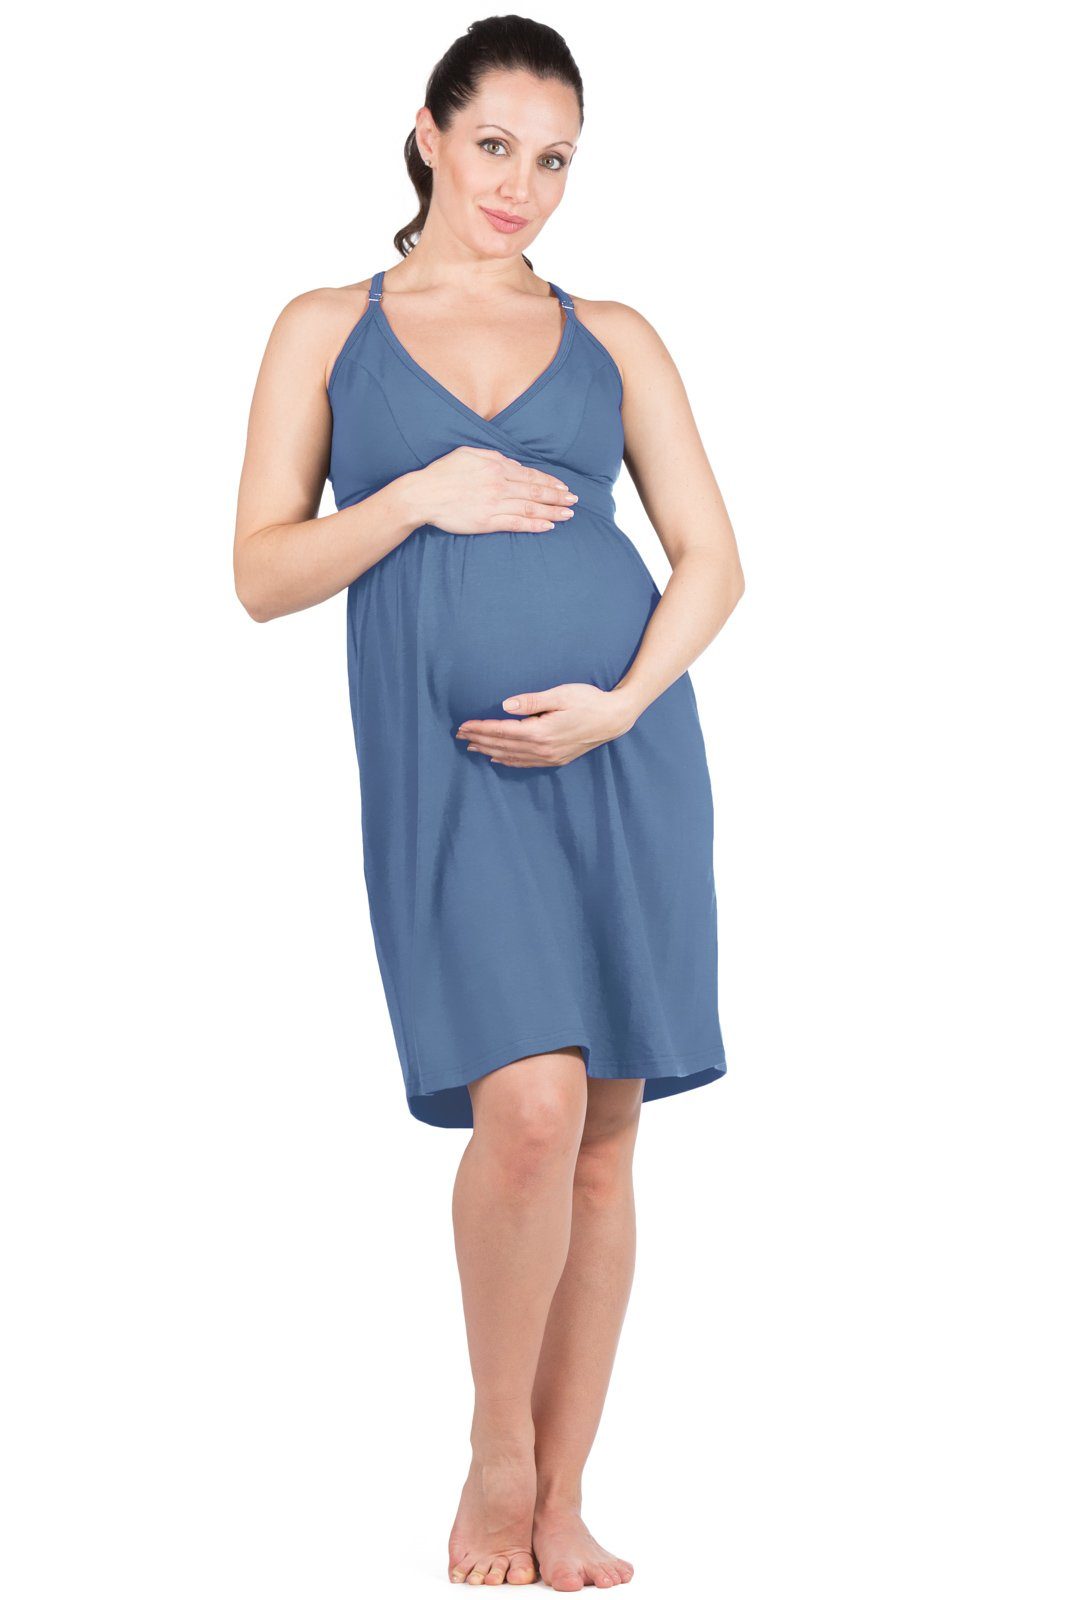 Pure Organic Cotton Maternity Nightgown Nursing Gown, Breastfeeding Dress,  Nursing Friendly Nighty. Maternity Lingerie. Bogema Lingerie -  Israel